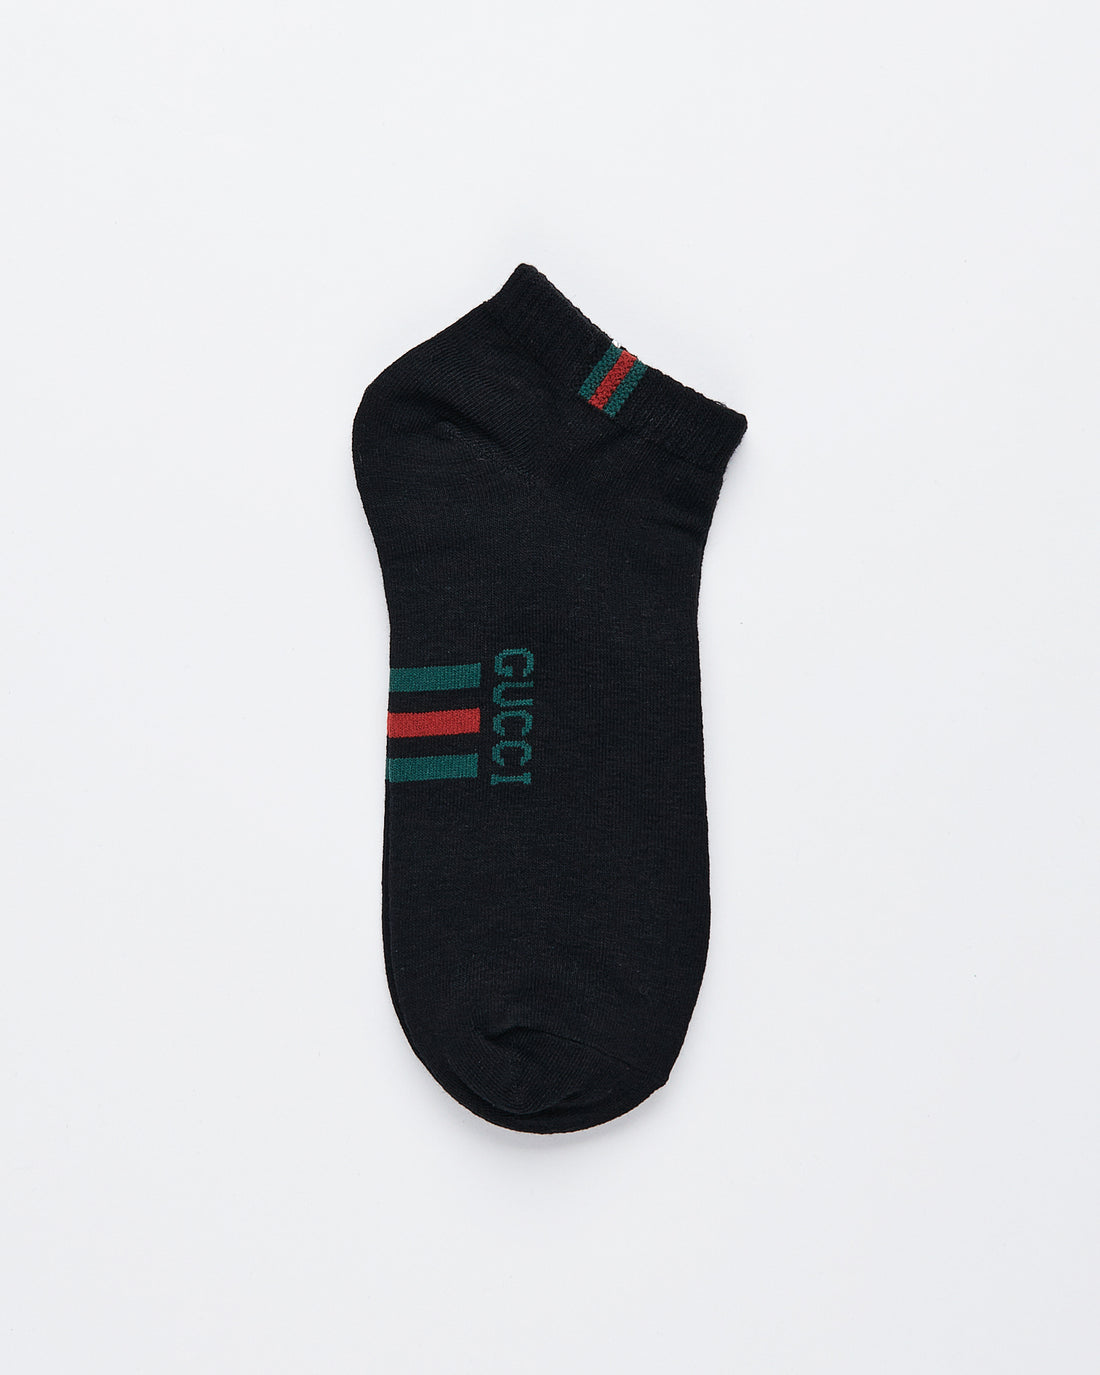 GUC Black Low Cut 1 Pairs Socks 1.90